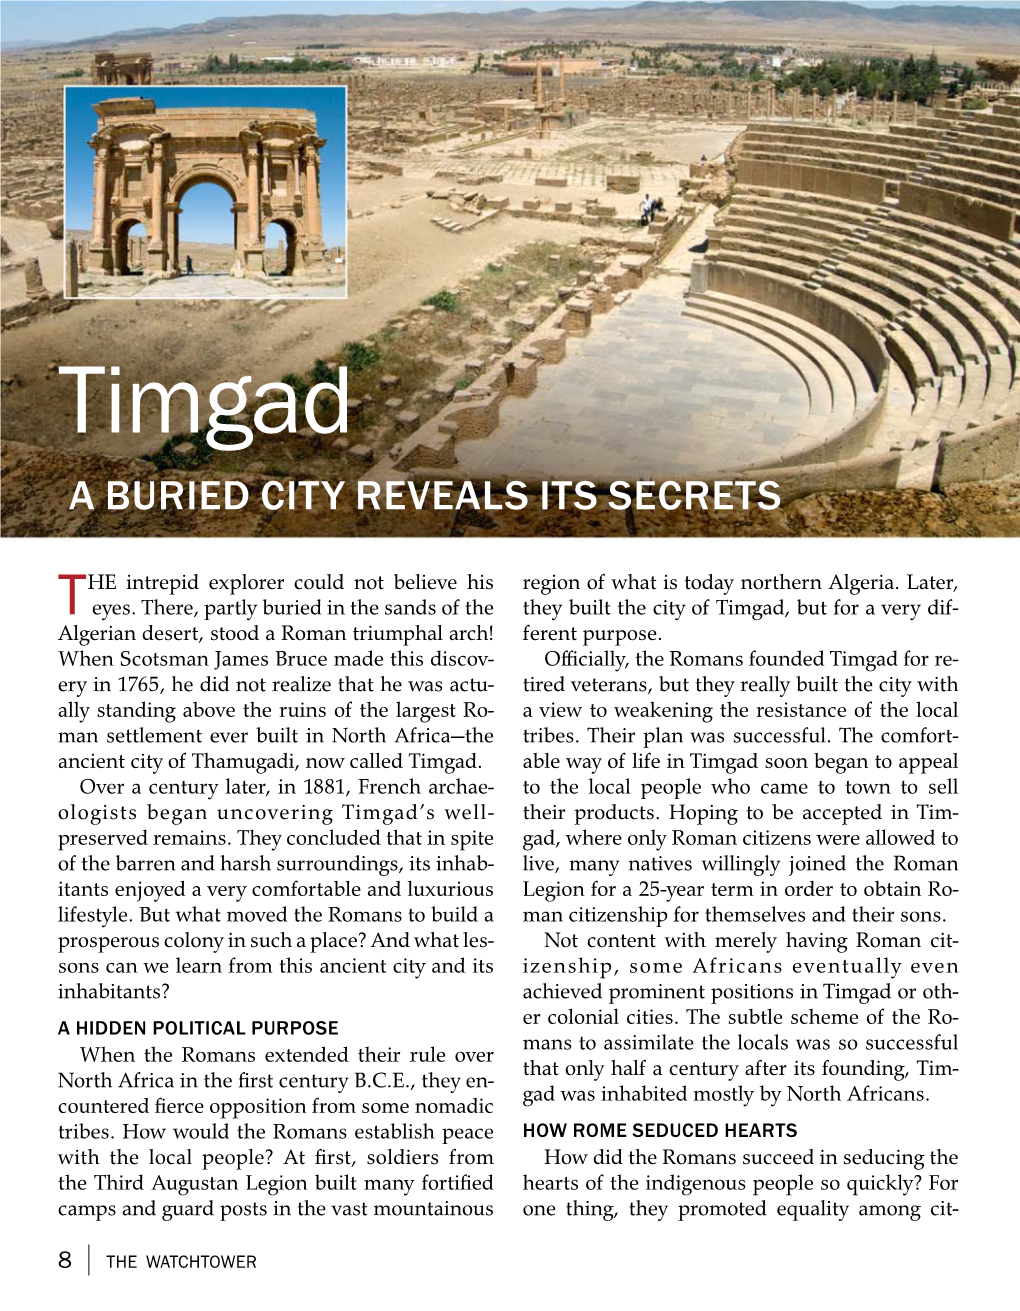 Timgad a BURIED CITY REVEALS ITS SECRETS